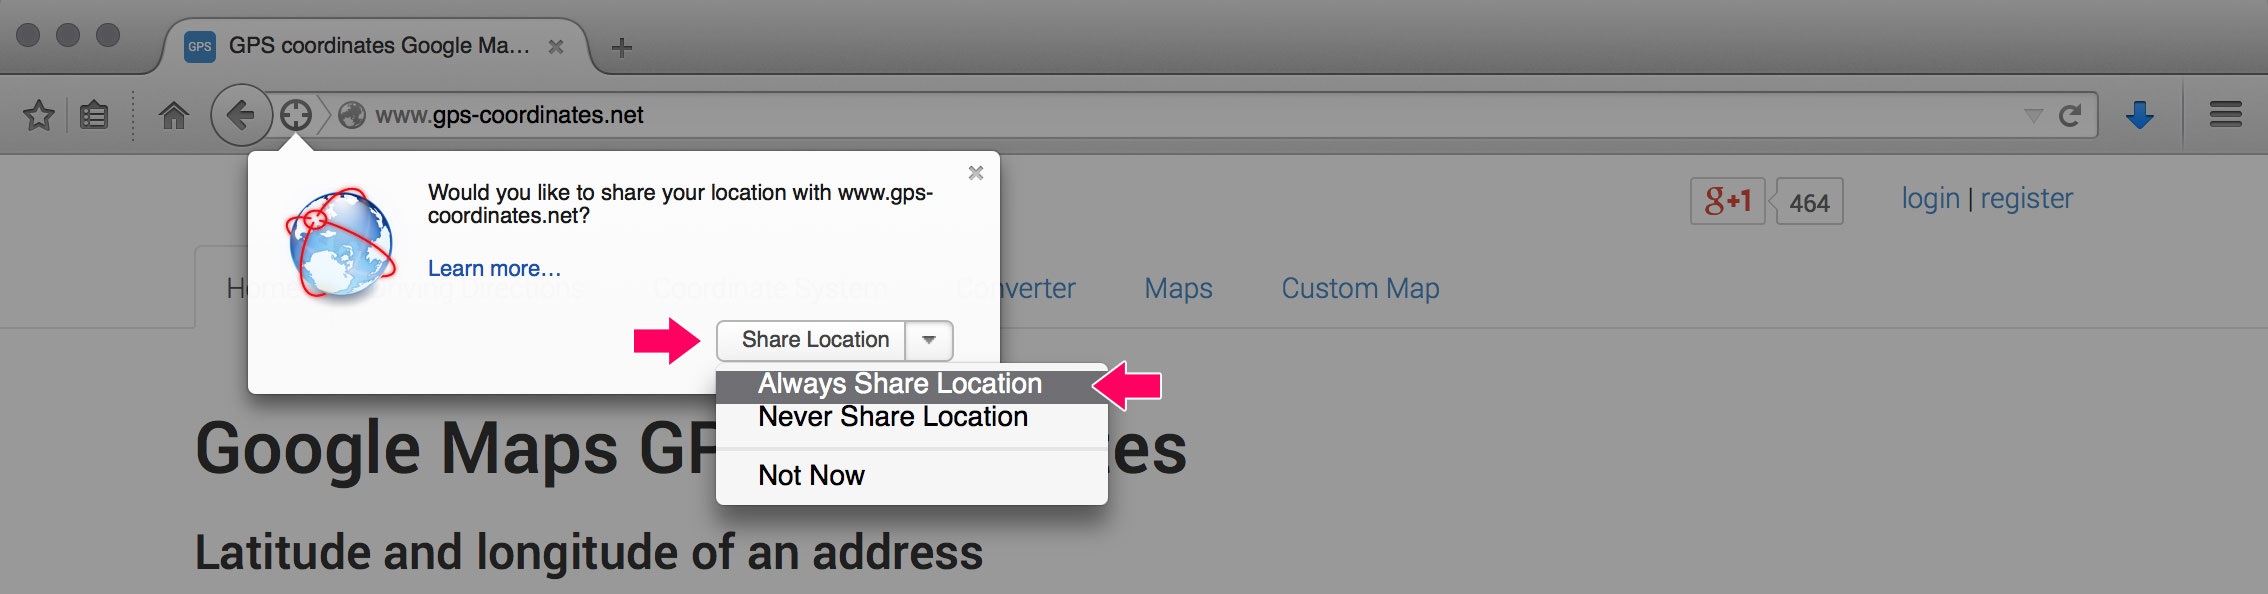 Firefox always share location